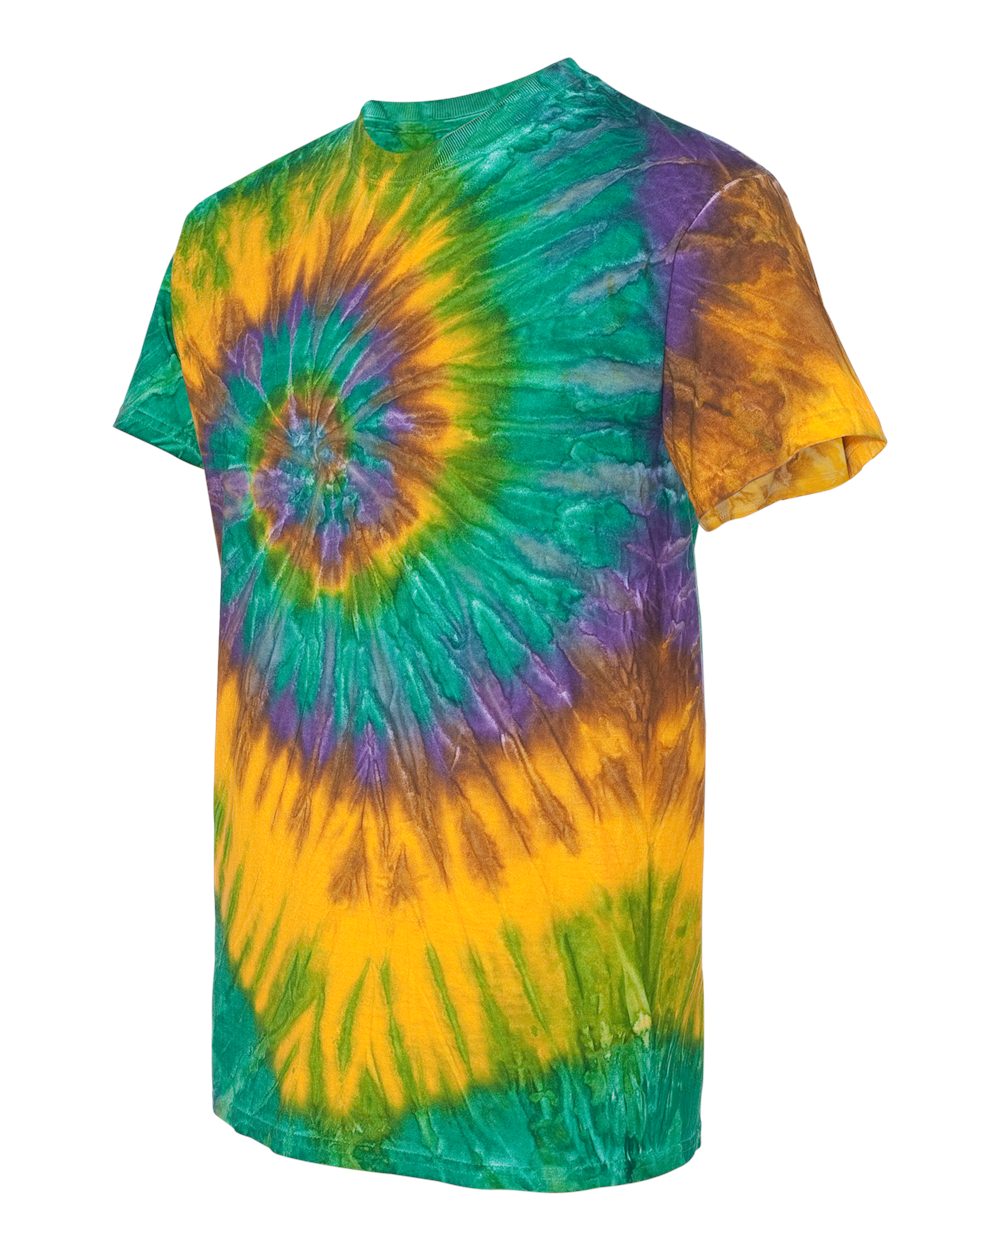 Dyenomite 200RP - Ripple Pigment Dyed T-Shirt $6.81 - Men's T-Shirts